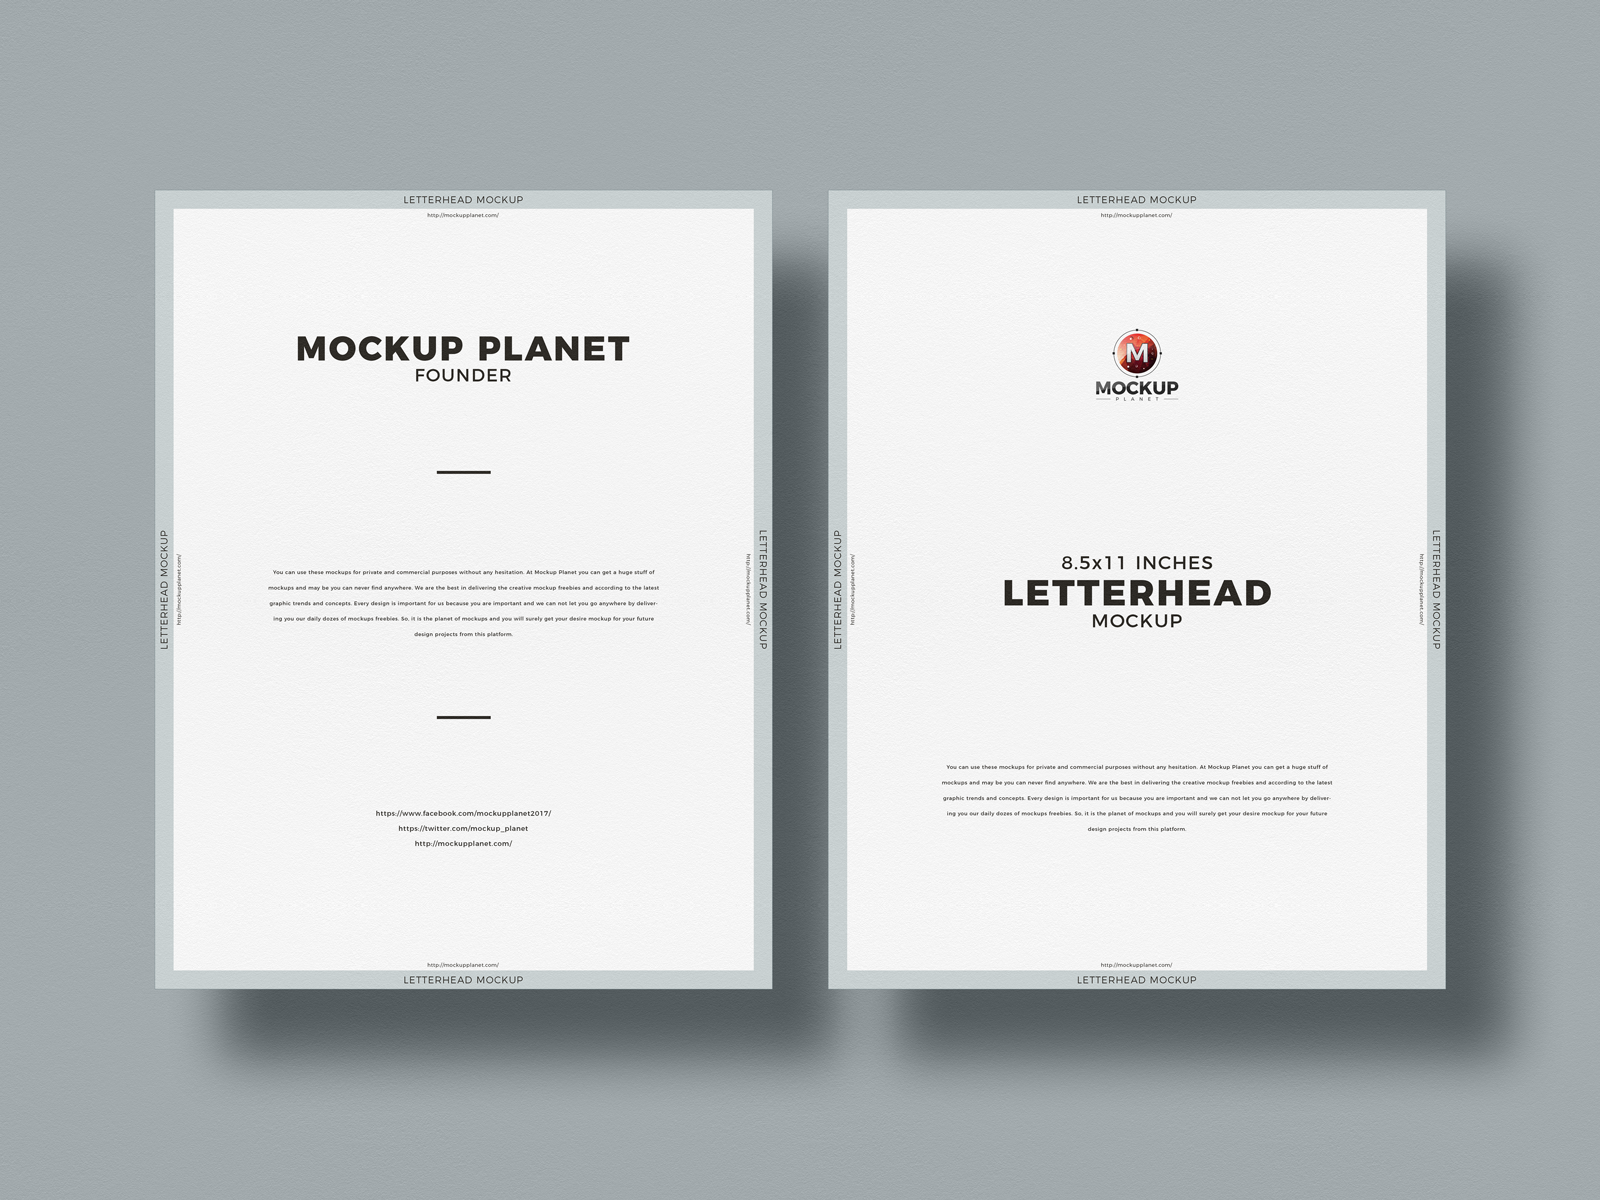 Download Free Letter Size Letterhead Mockup By Mockup Planet On Dribbble